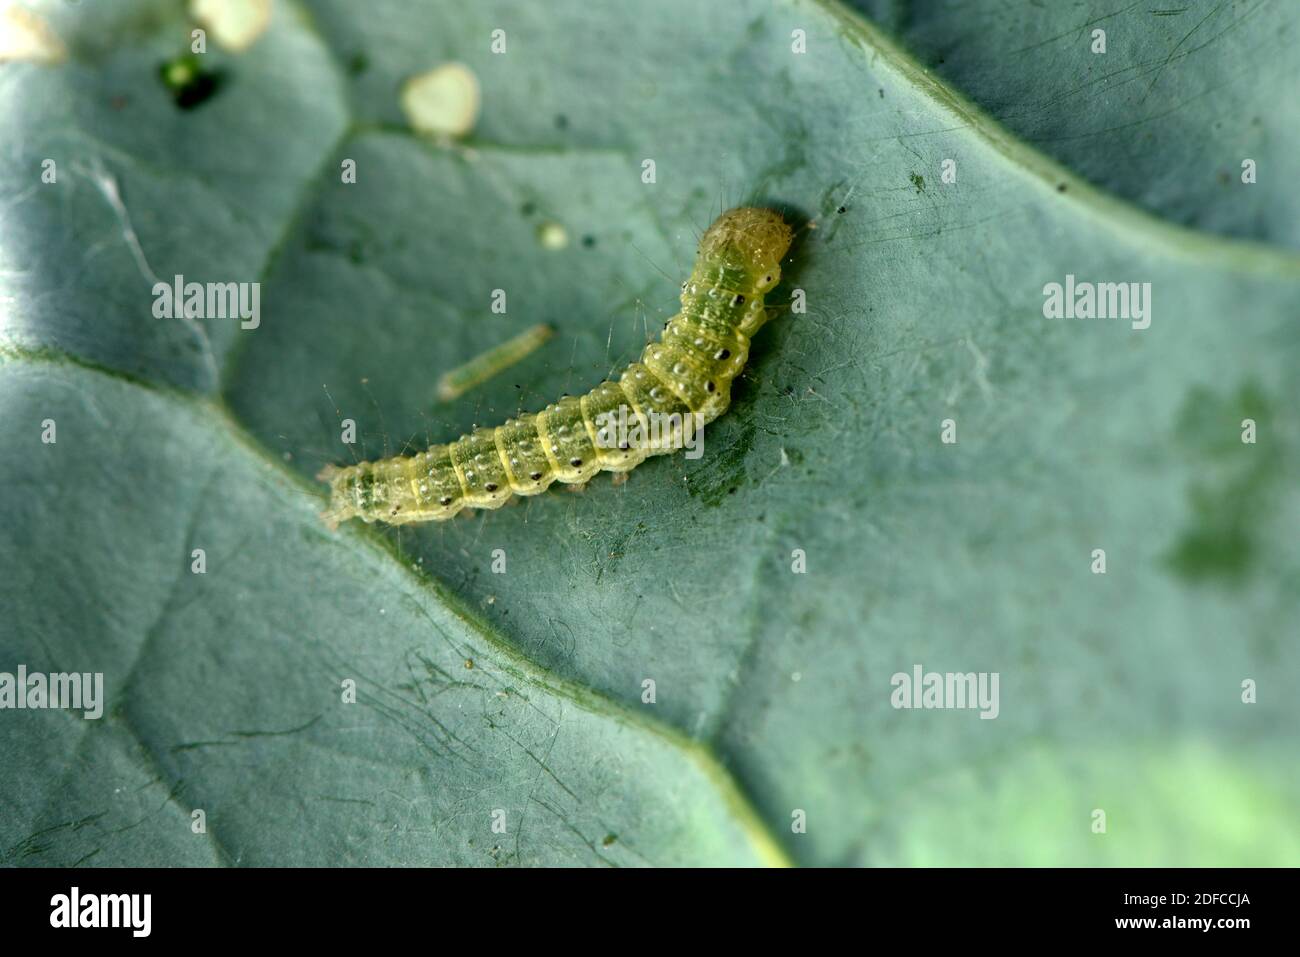 France, Territoire de Belfort, Belfort, vegetable garden, Cabbage moth (Plutella xylostella), caterpillar under a Brussels sprout leaf Stock Photo